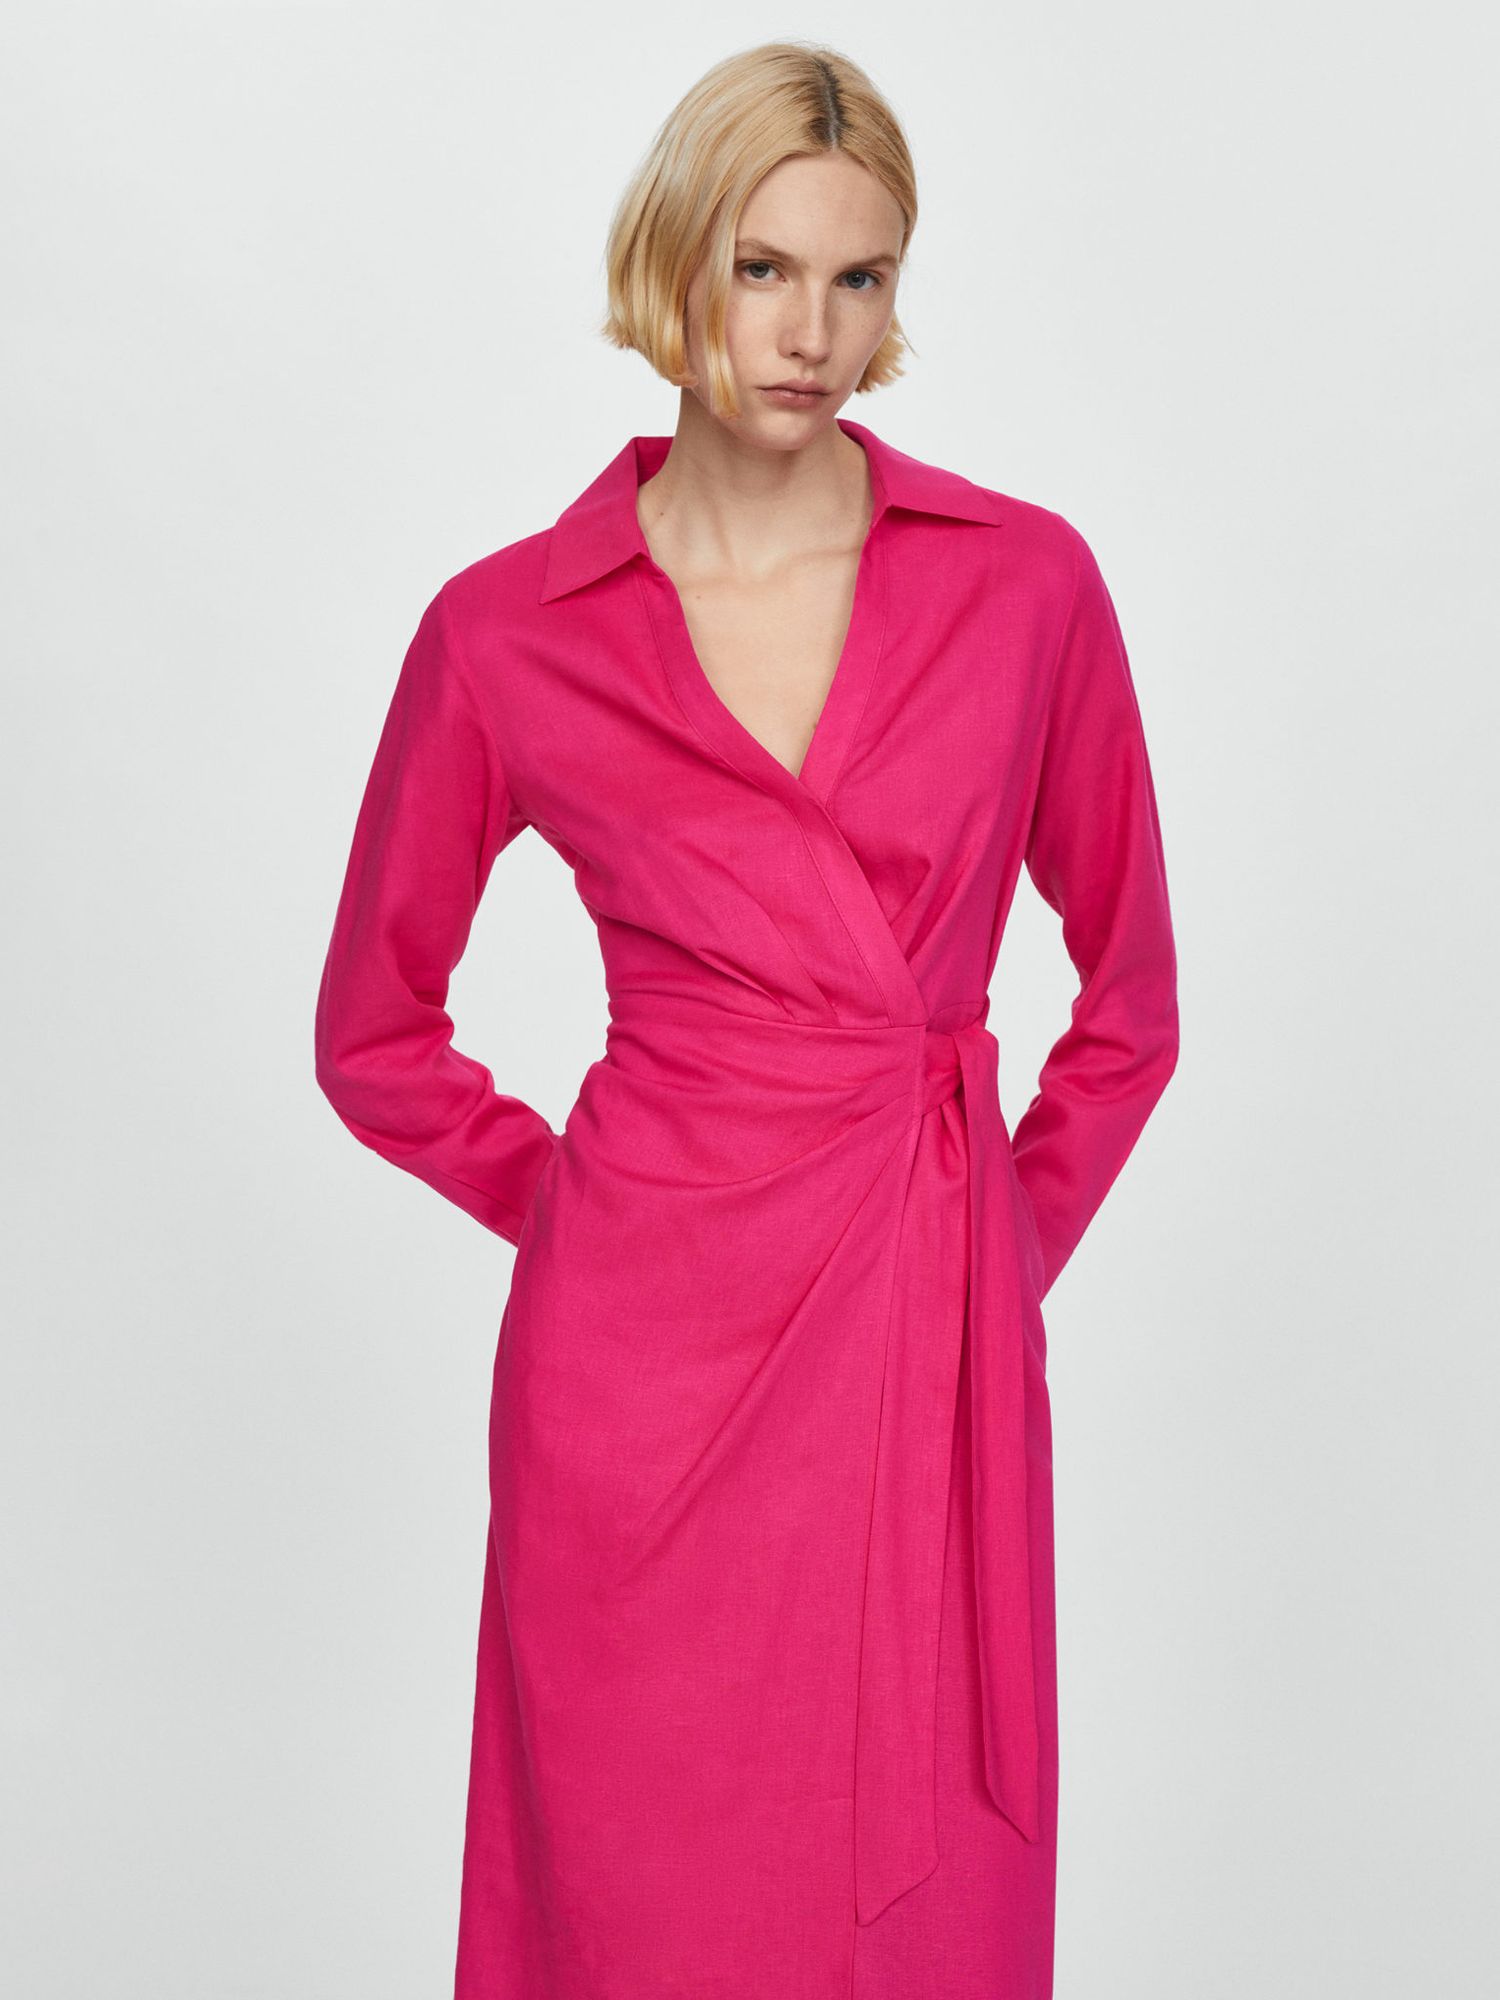 Mango Carola Tie Detail Linen Blend Dress, Bright Pink, 10